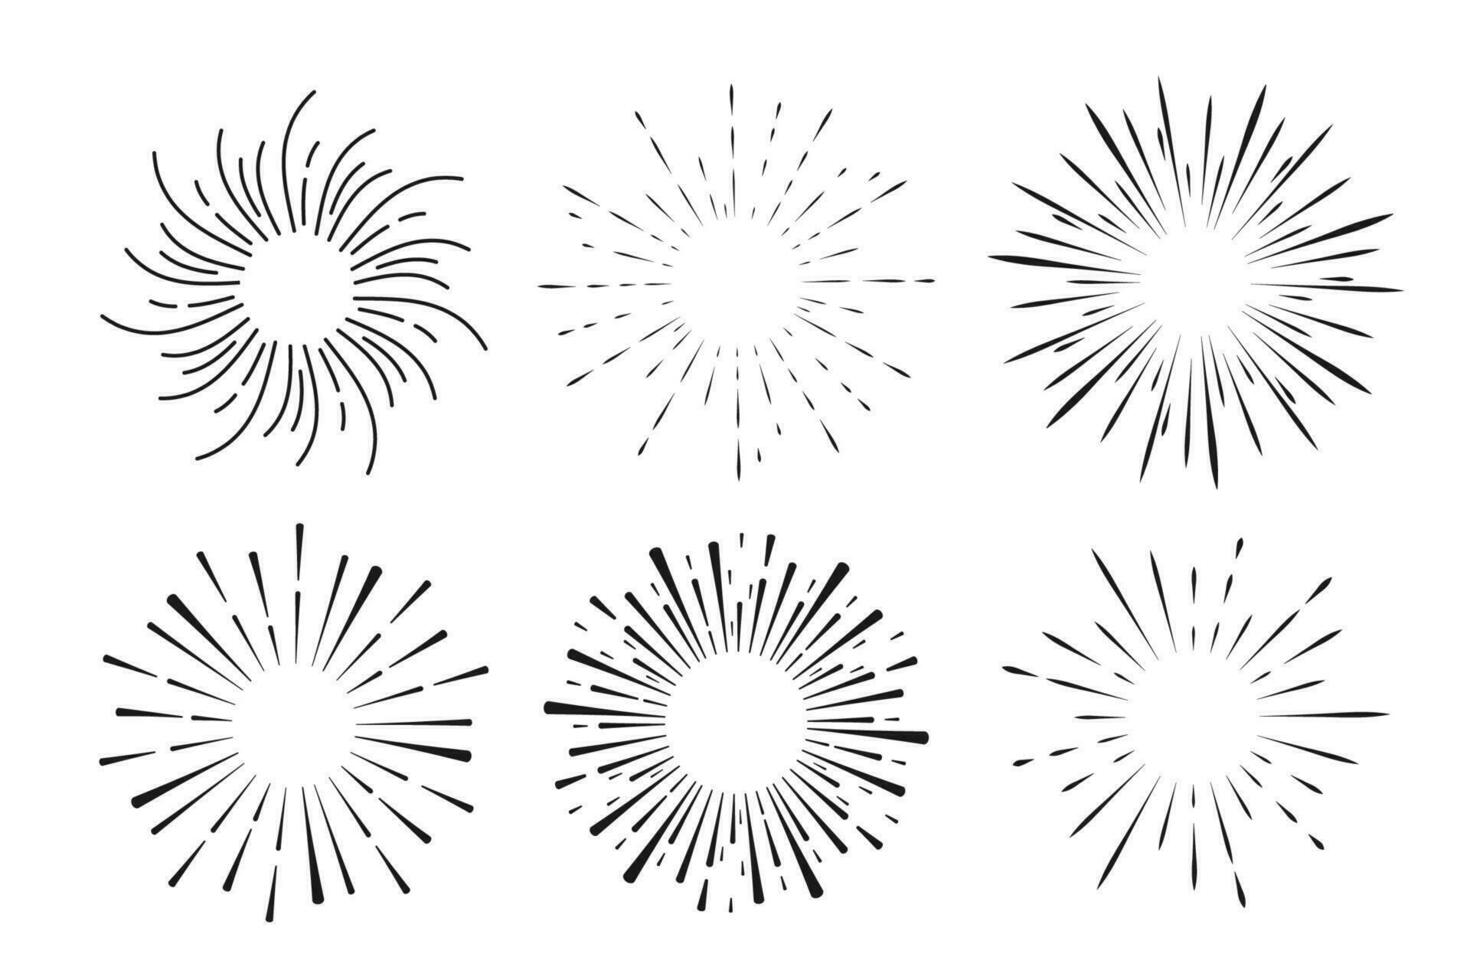 Set Fireworks, rays, sunburst frames circle border decoration, sparkle in doodle style, line sketch explosion isolated on white background. Vector illustration